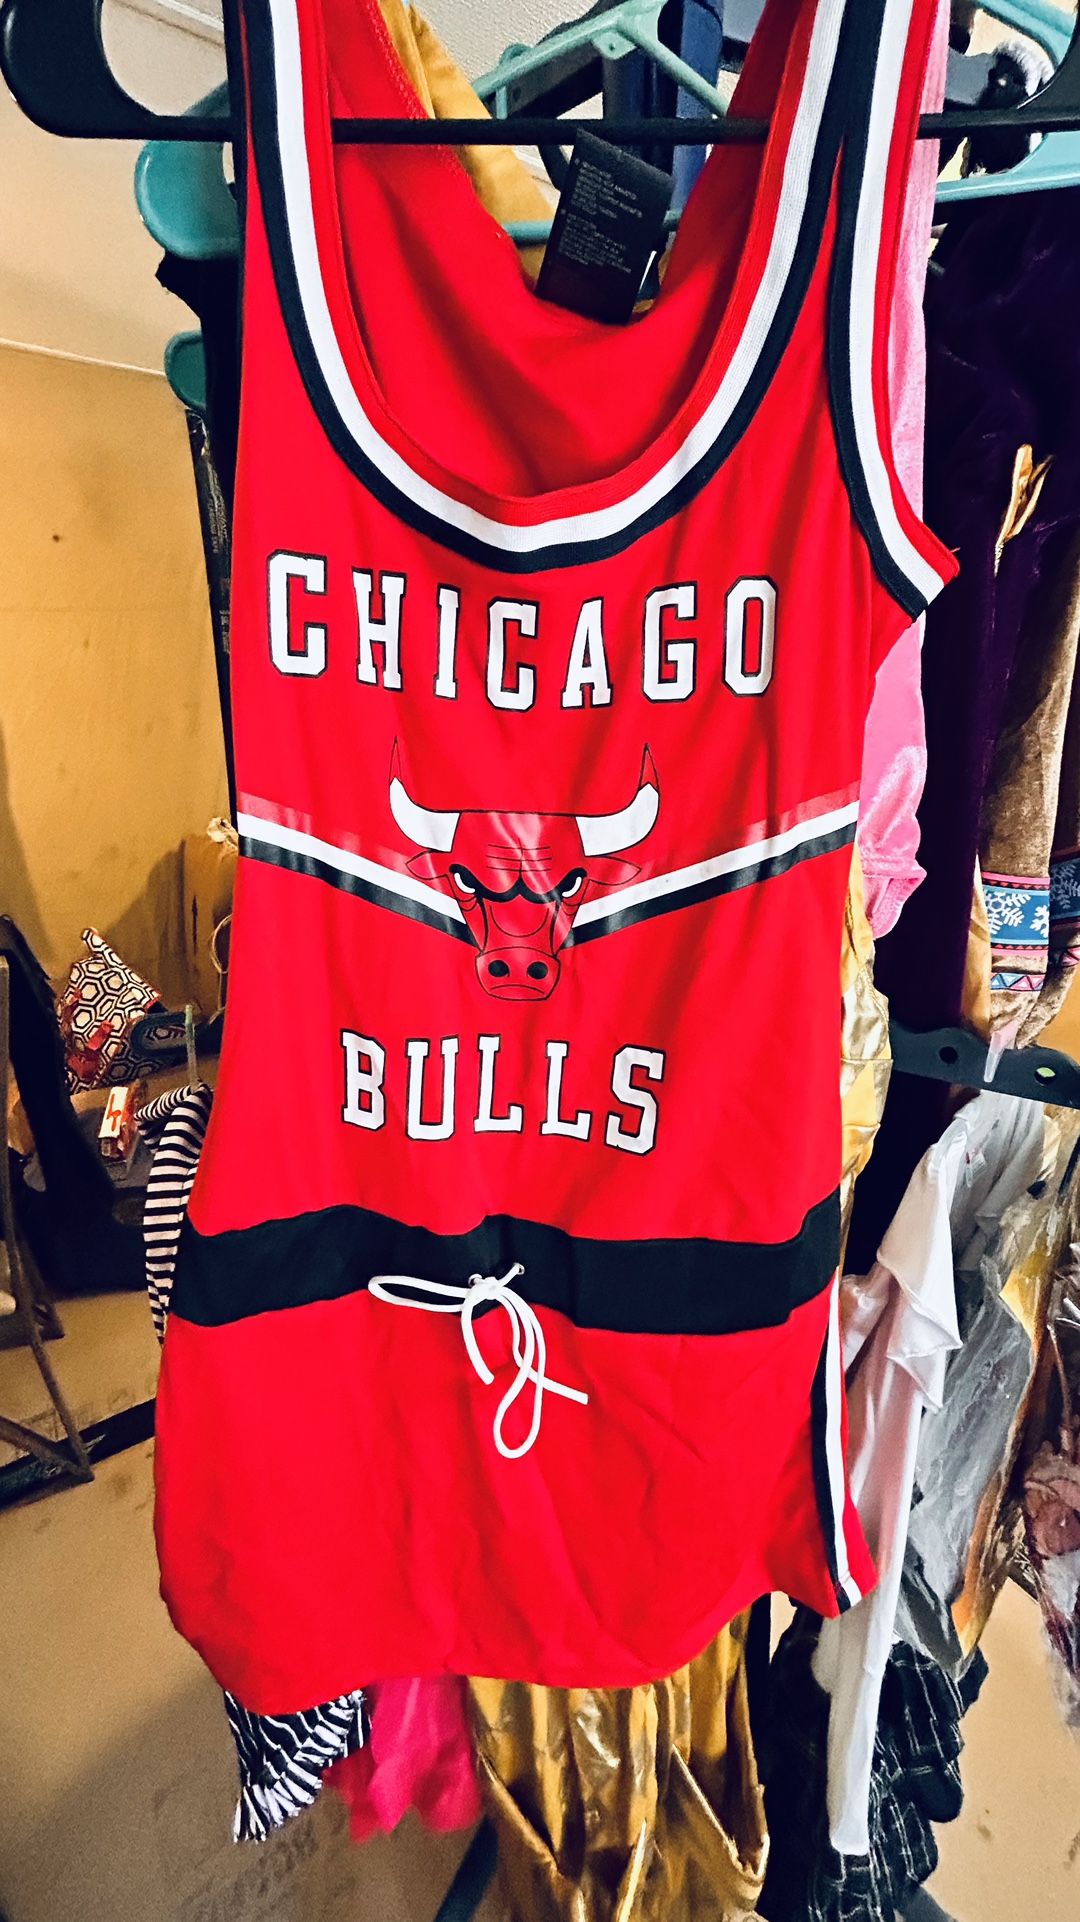 Bulls costume dress